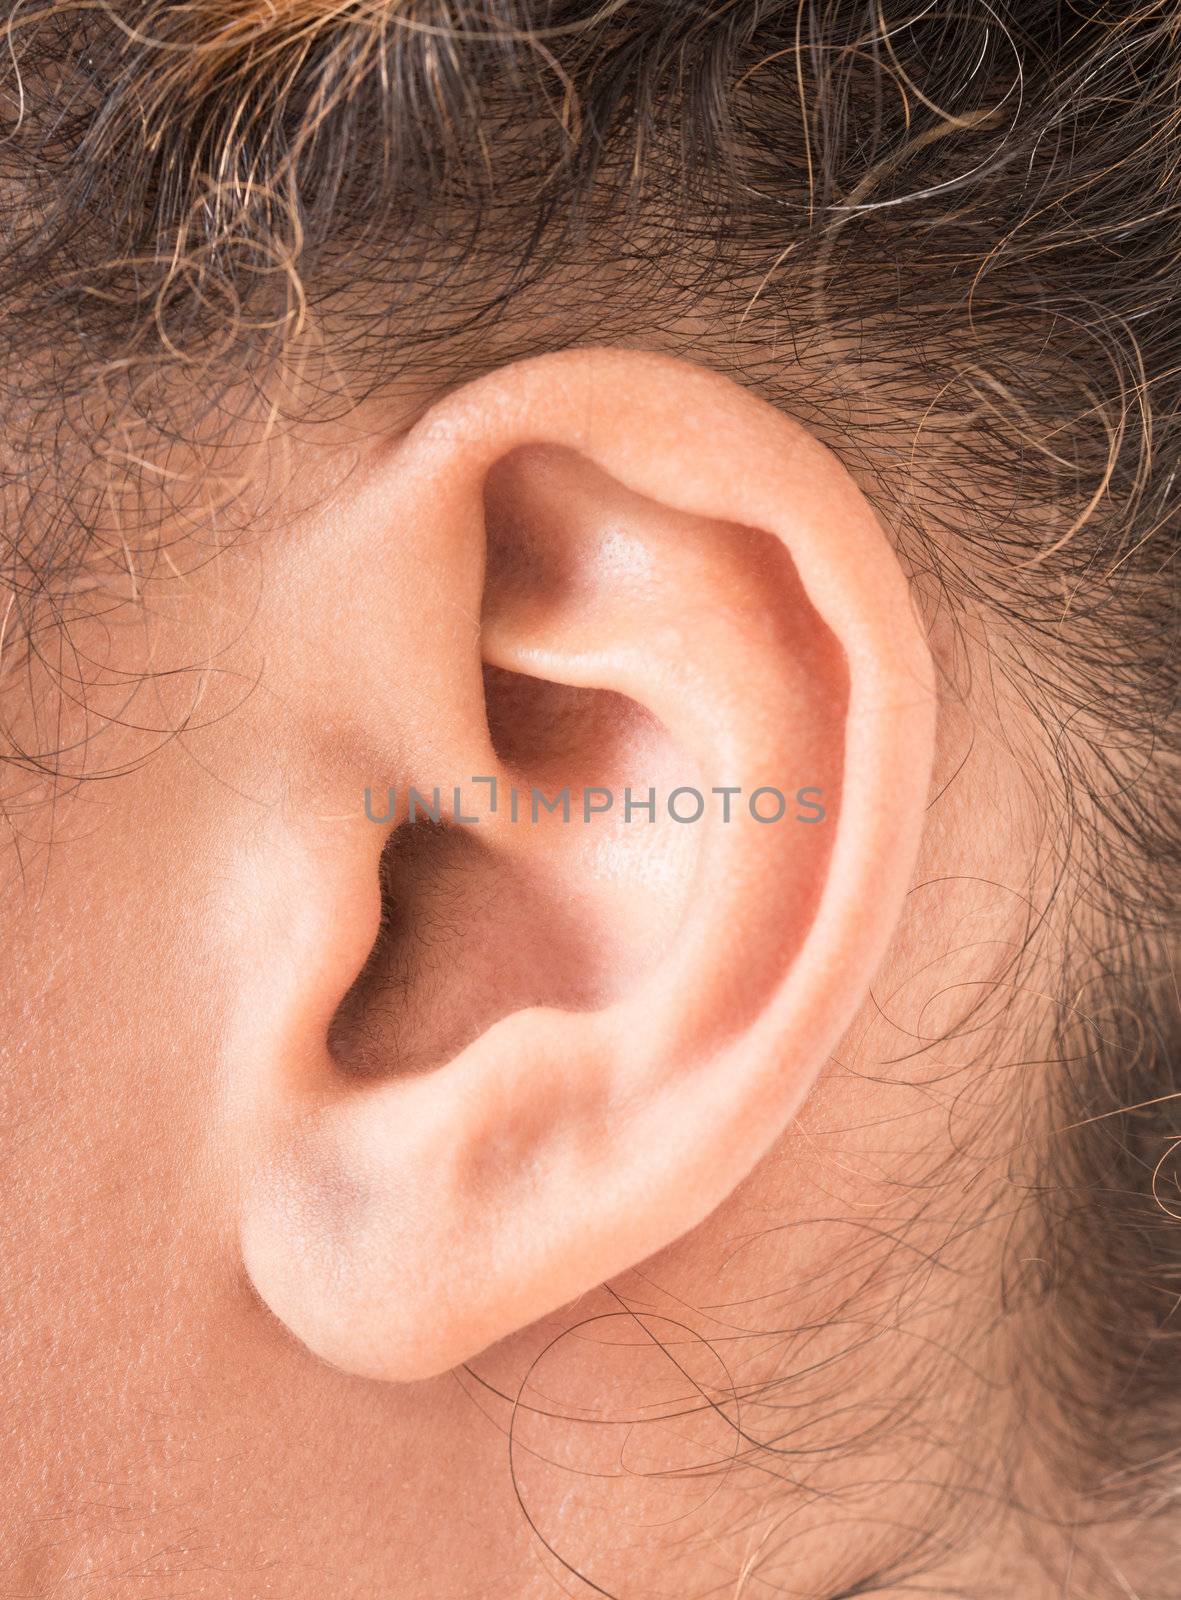 female ear close up